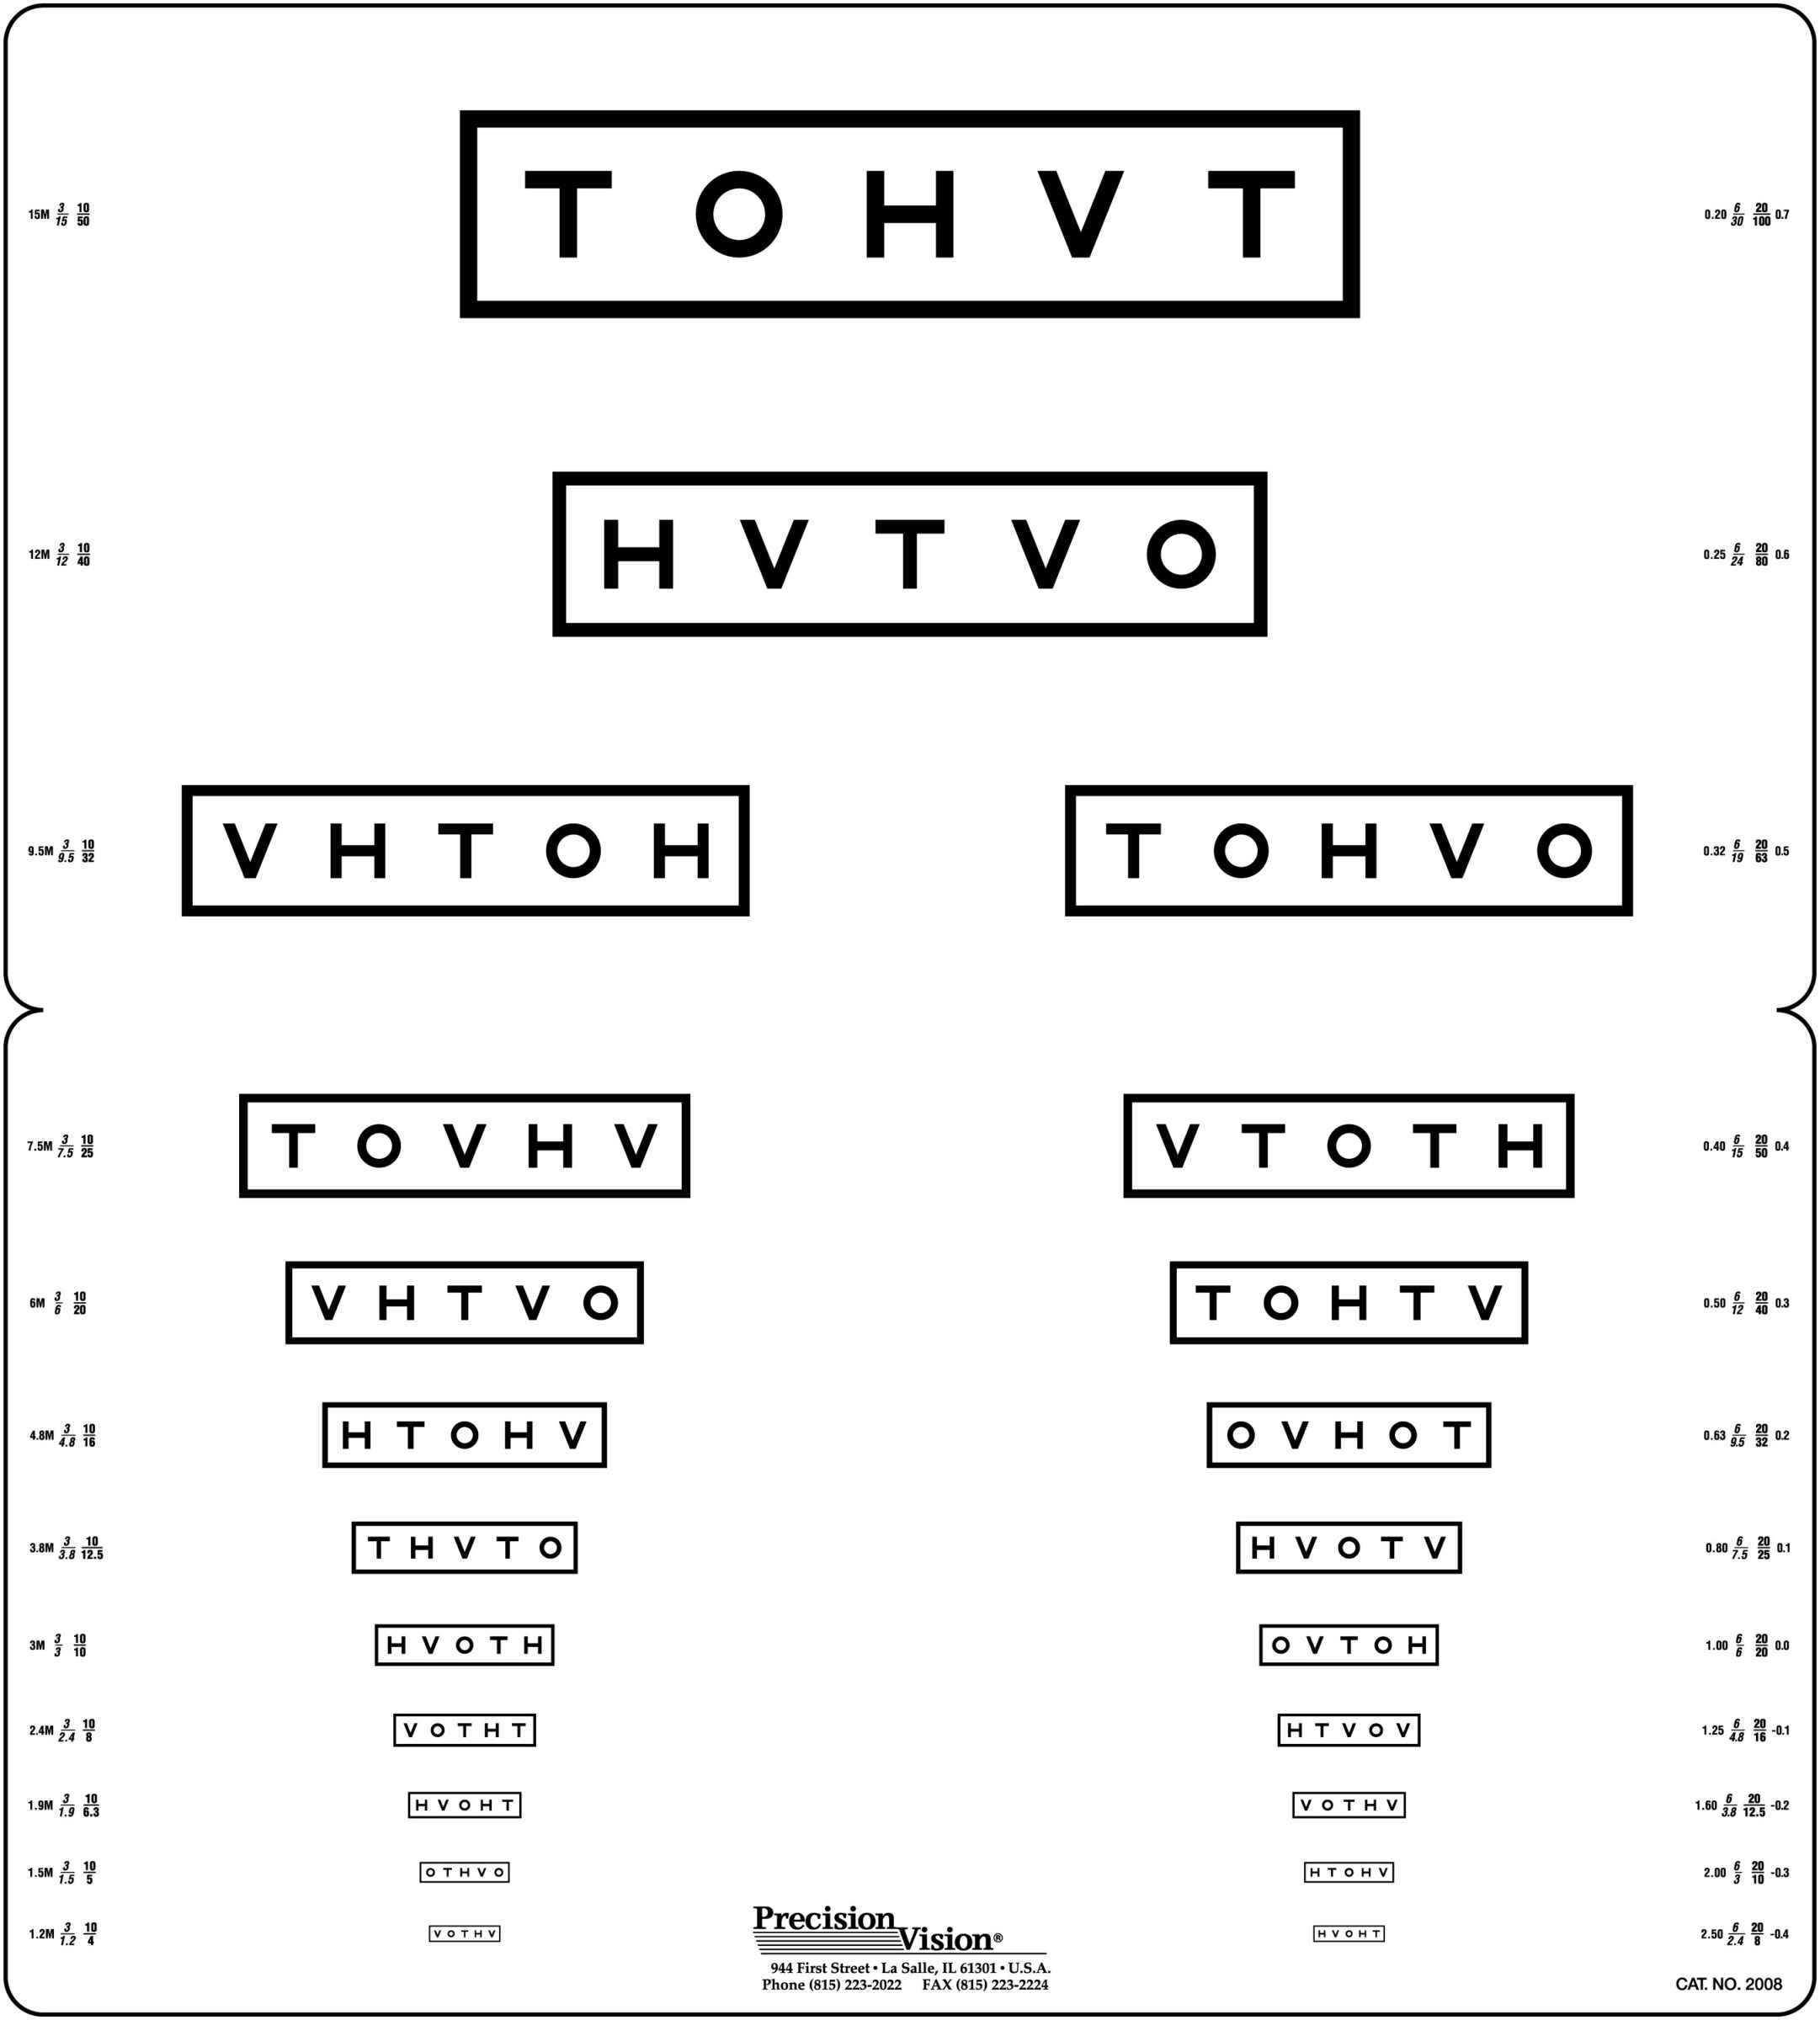 HOTV Visual Acuity Chart 10ft